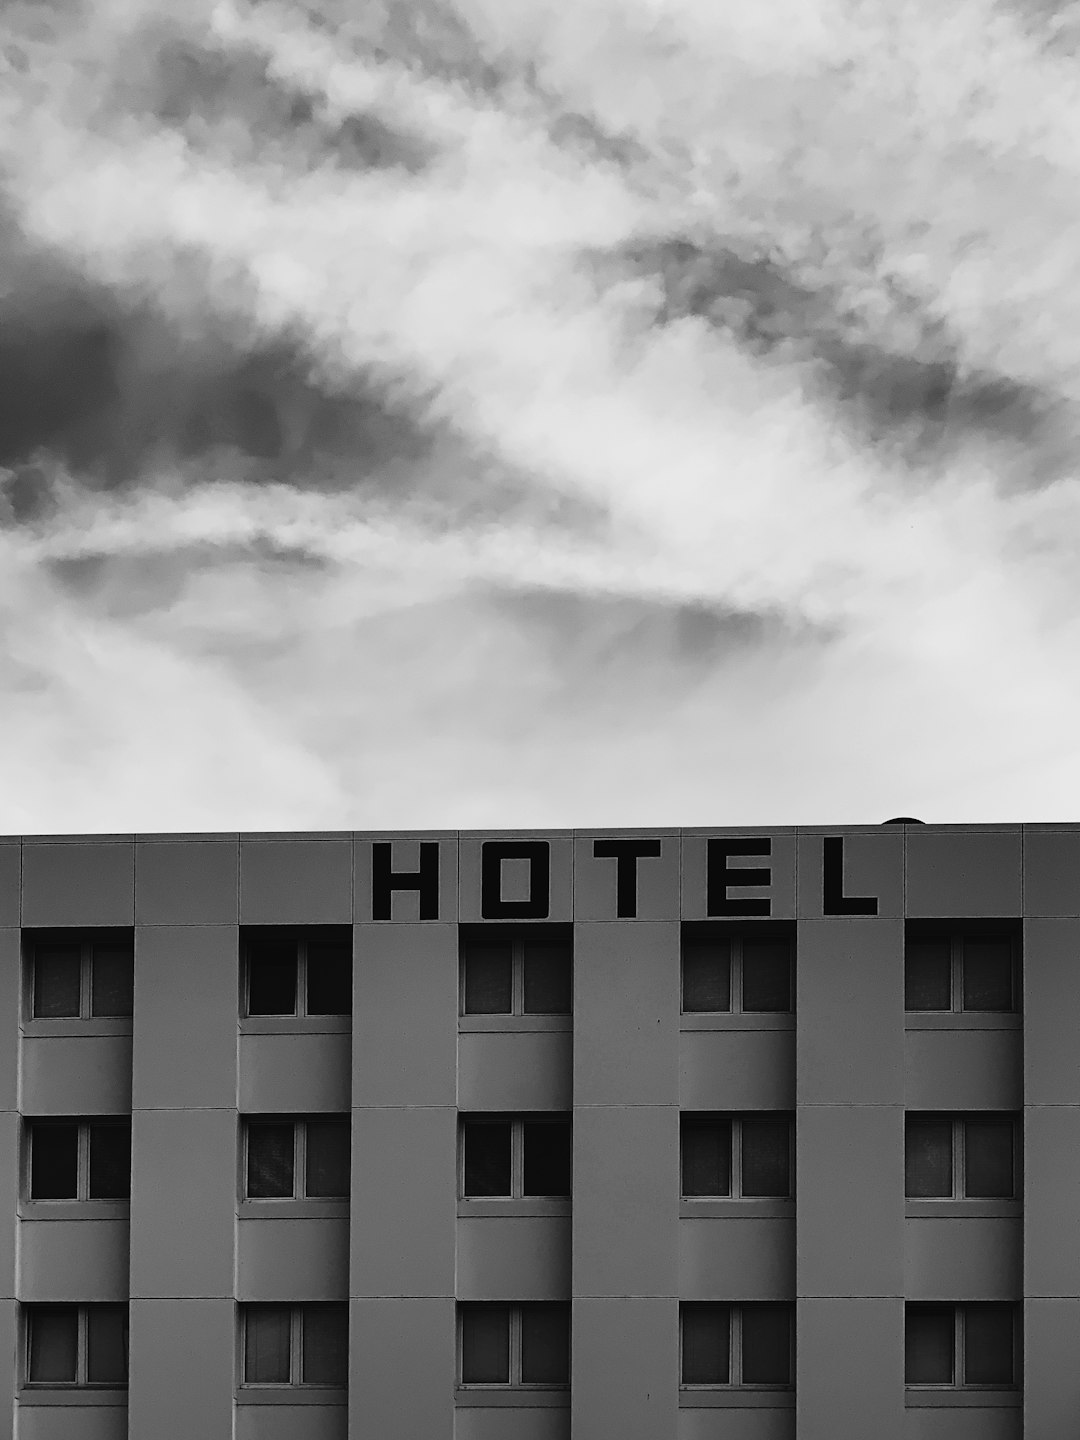 Hotel building under gray sky